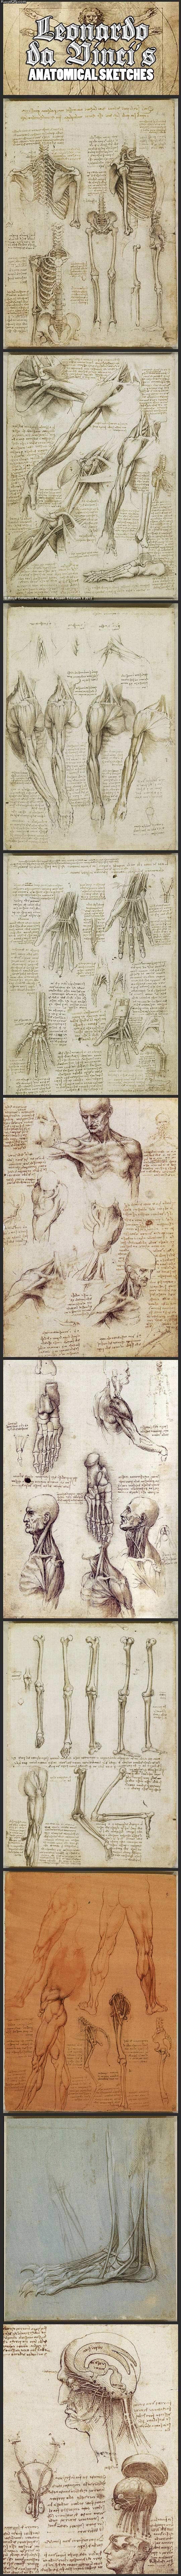 leonardo_da_vinci_s_original_anatomical_sketches.jpg